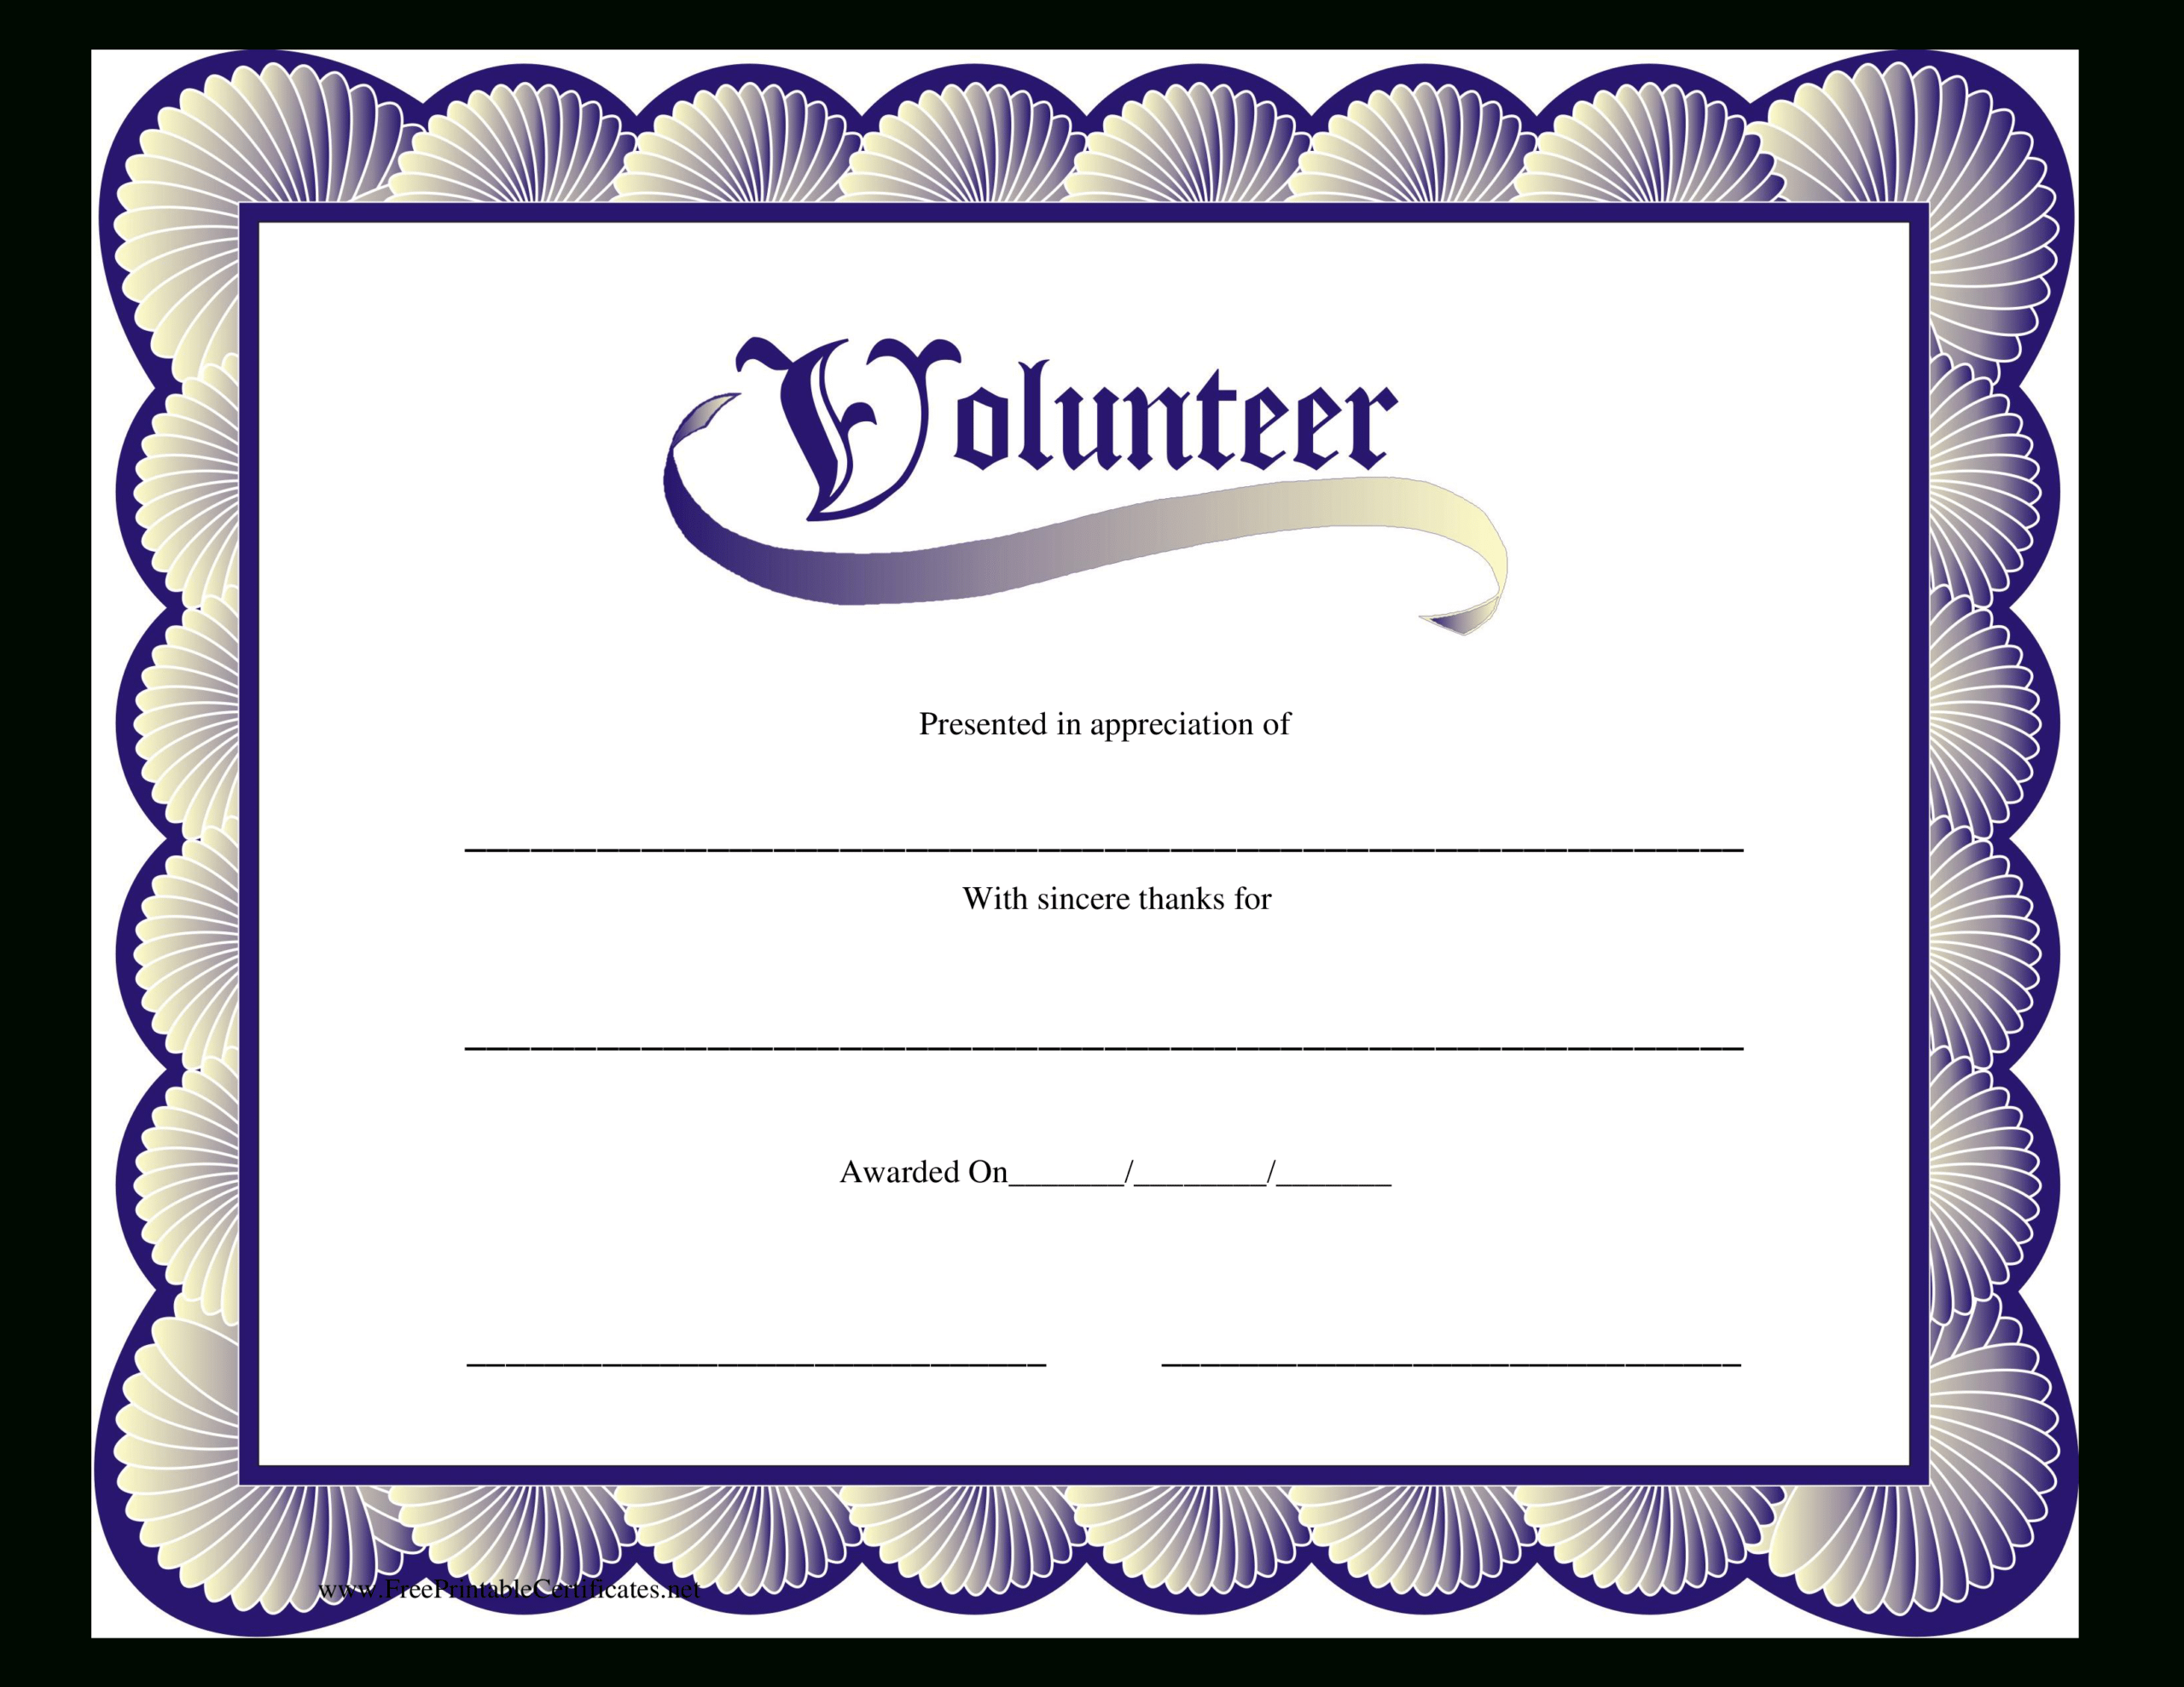 Volunteer Certificate | Templates At Allbusinesstemplates In Volunteer Of The Year Certificate Template